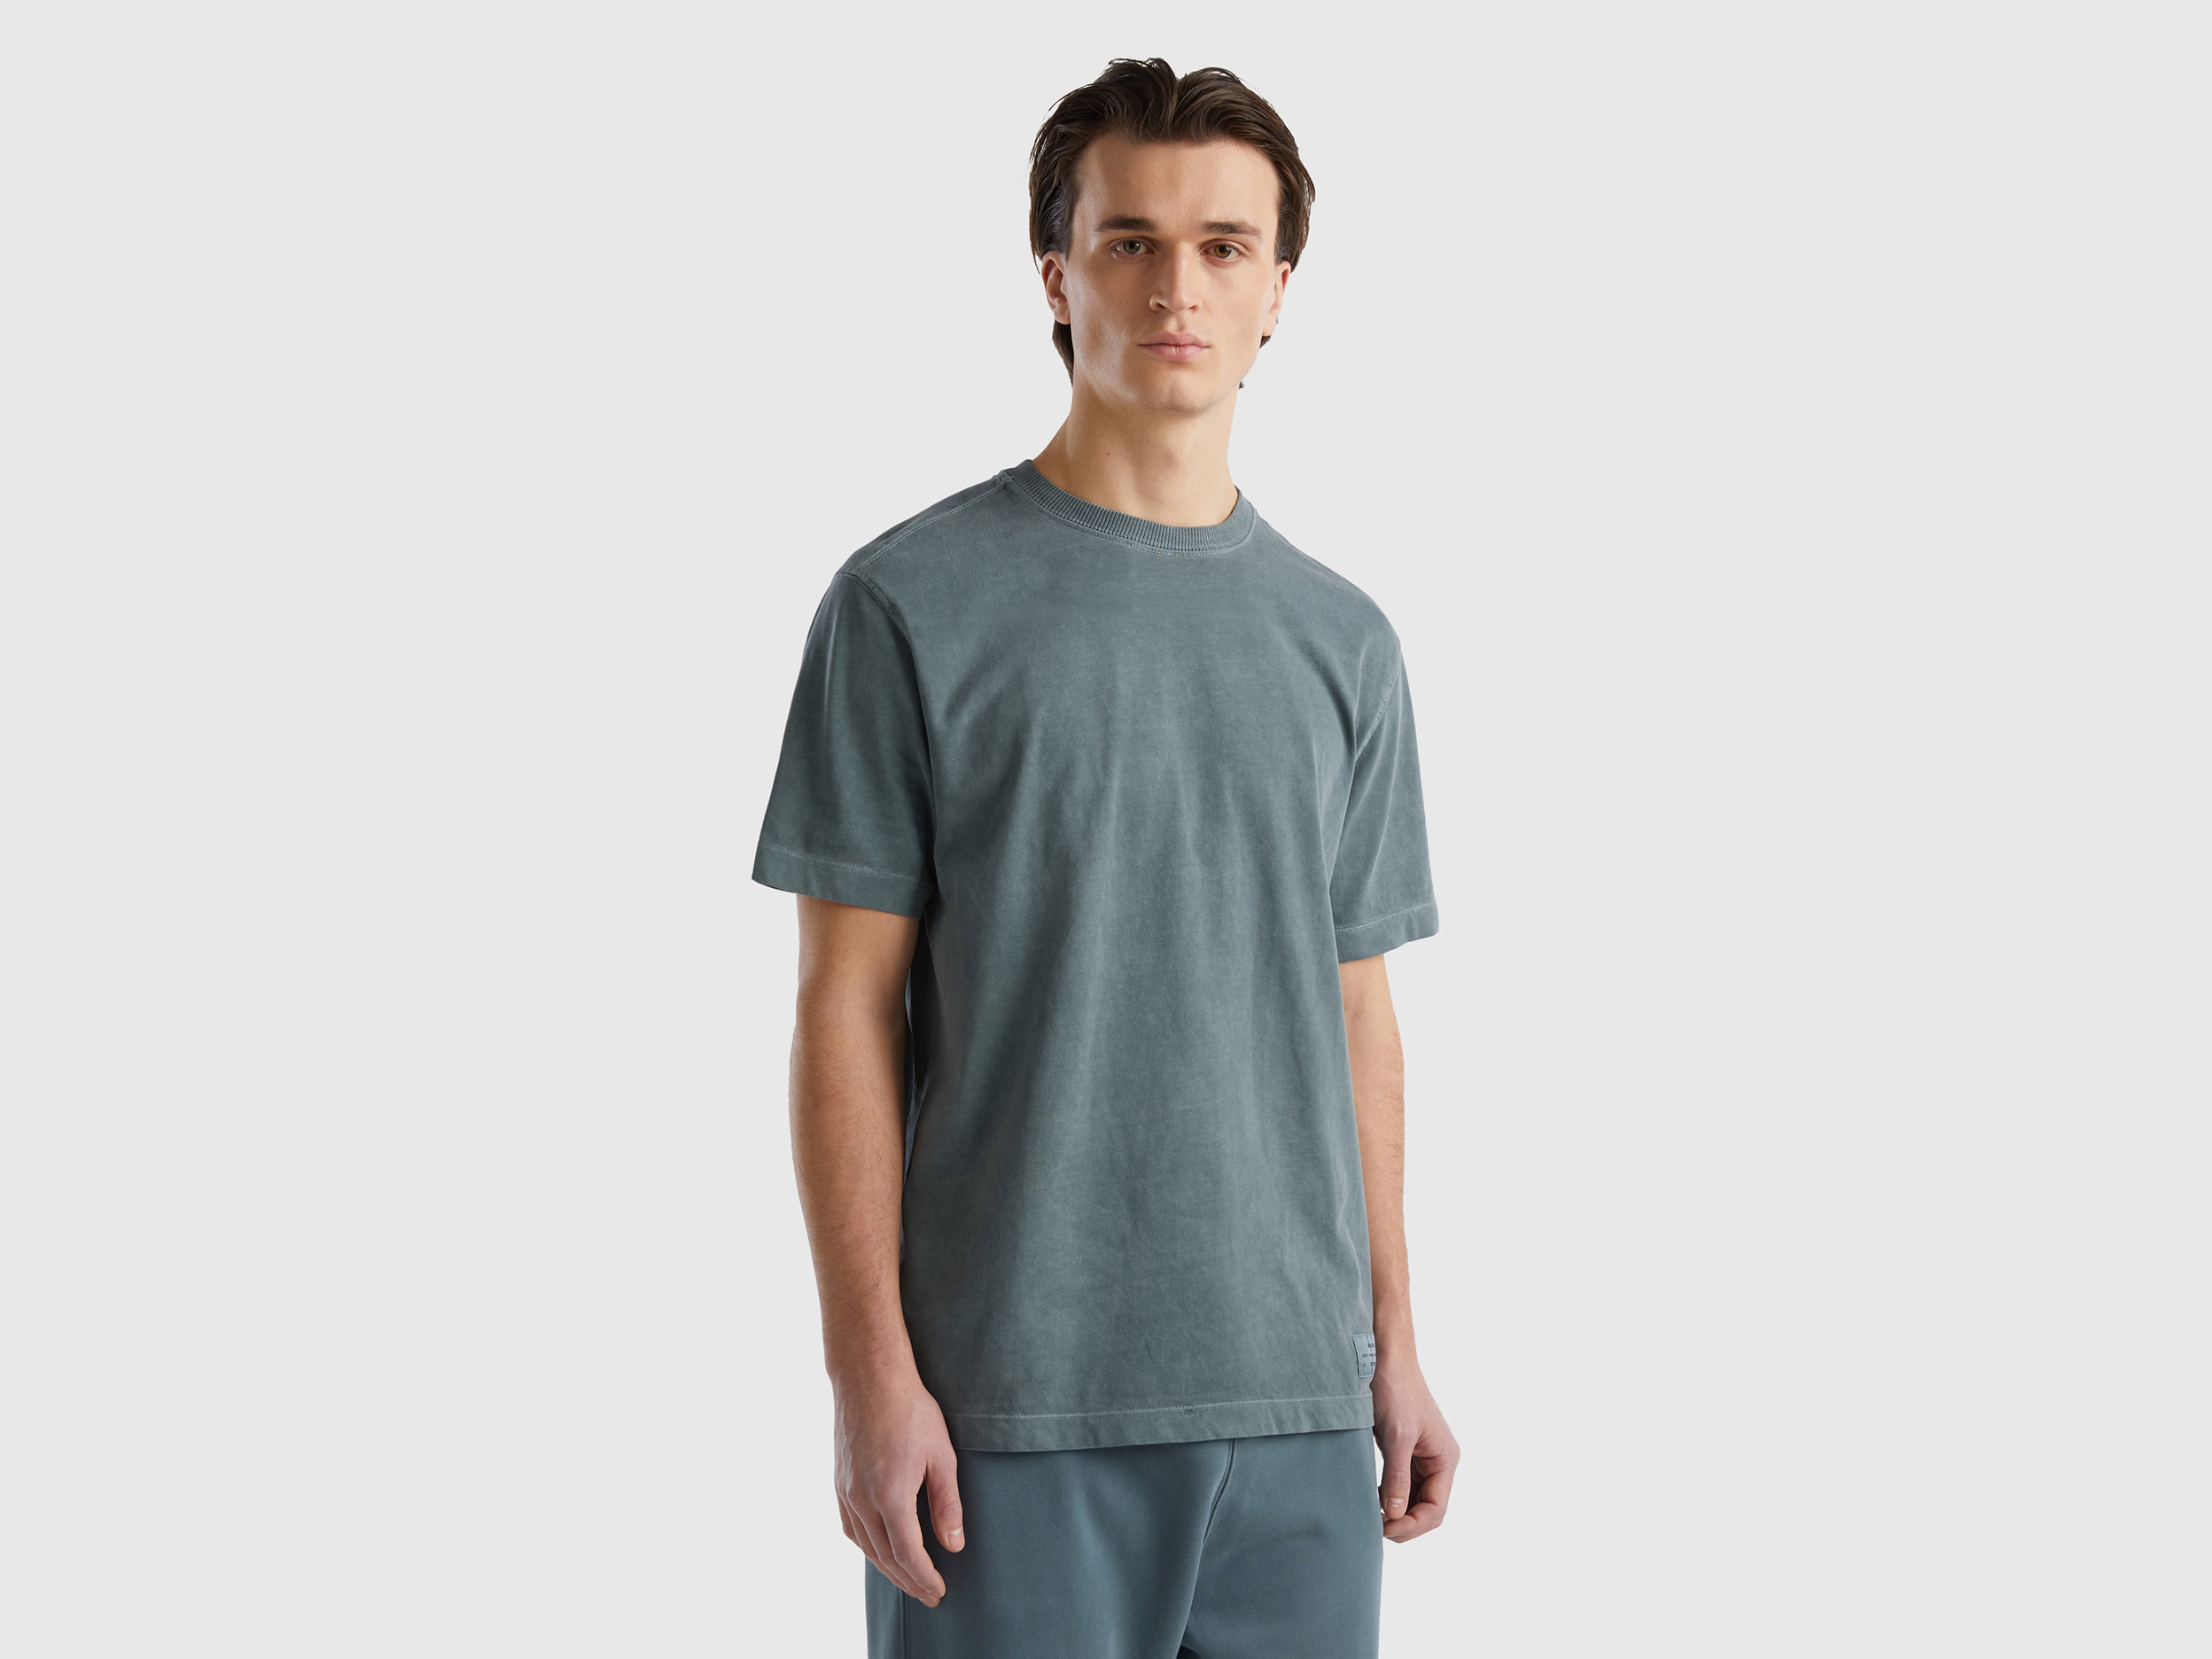 Benetton, 100% Organic Cotton Crew Neck T-shirt, size M, Dark Gray, Men